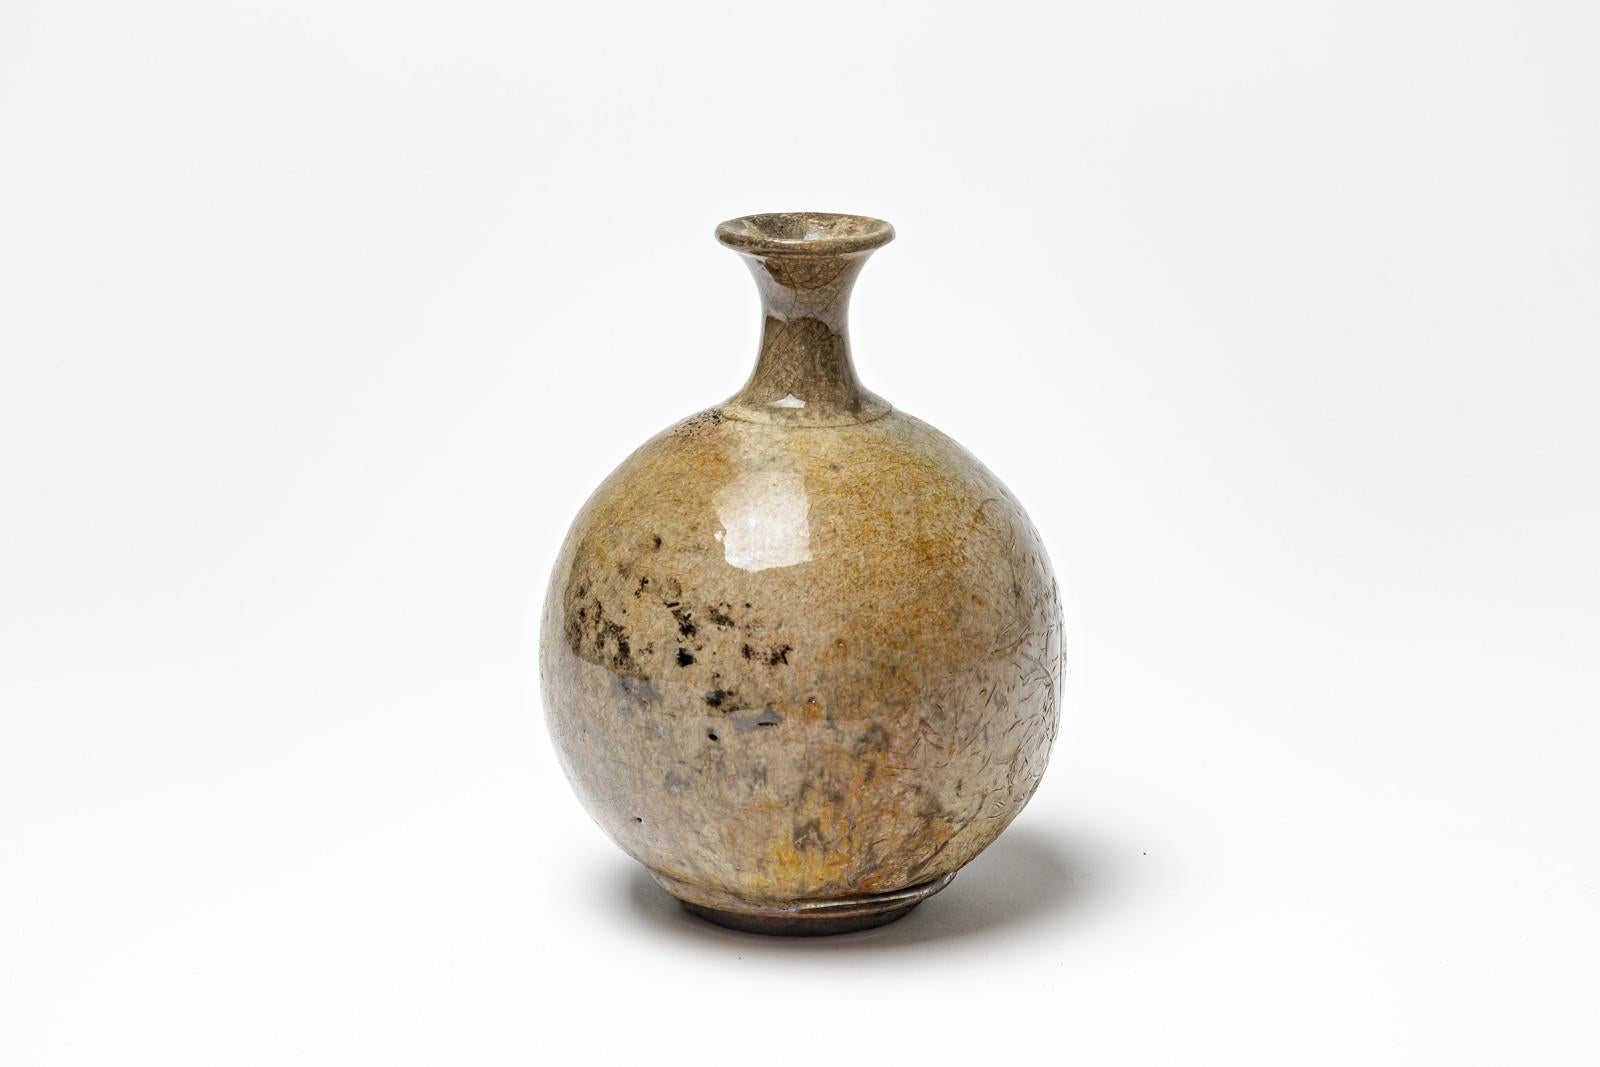 Yellow/brown glazed ceramic vase by Gisèle Buthod Garçon. 
Raku fired. Artist monogram under the base. Circa 1980-1990.
H : 6.3’ x 3.9’ inches.